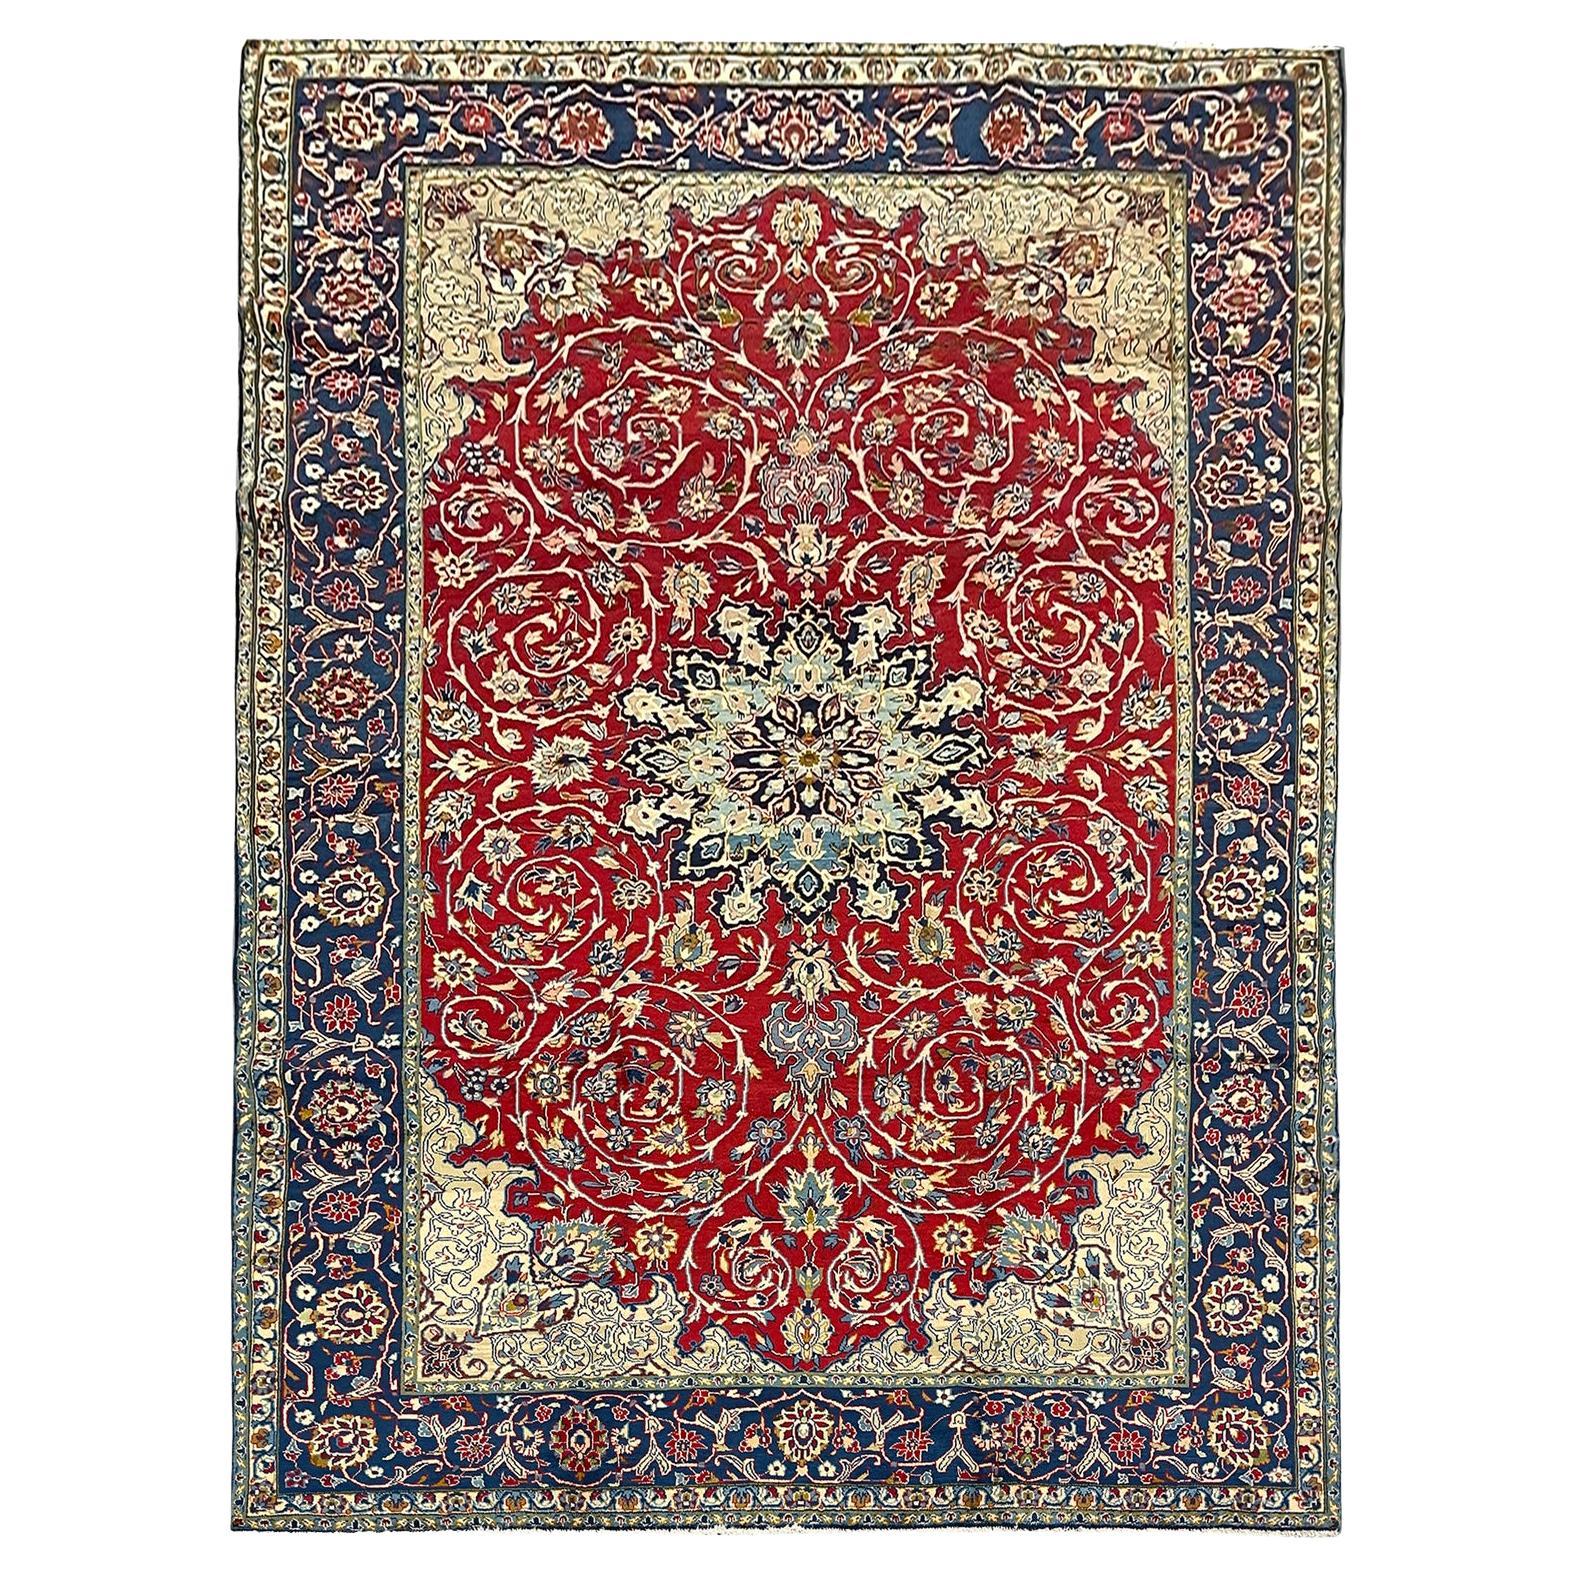 Large Handmade Carpet Traditional Red Wool Oriental Rug